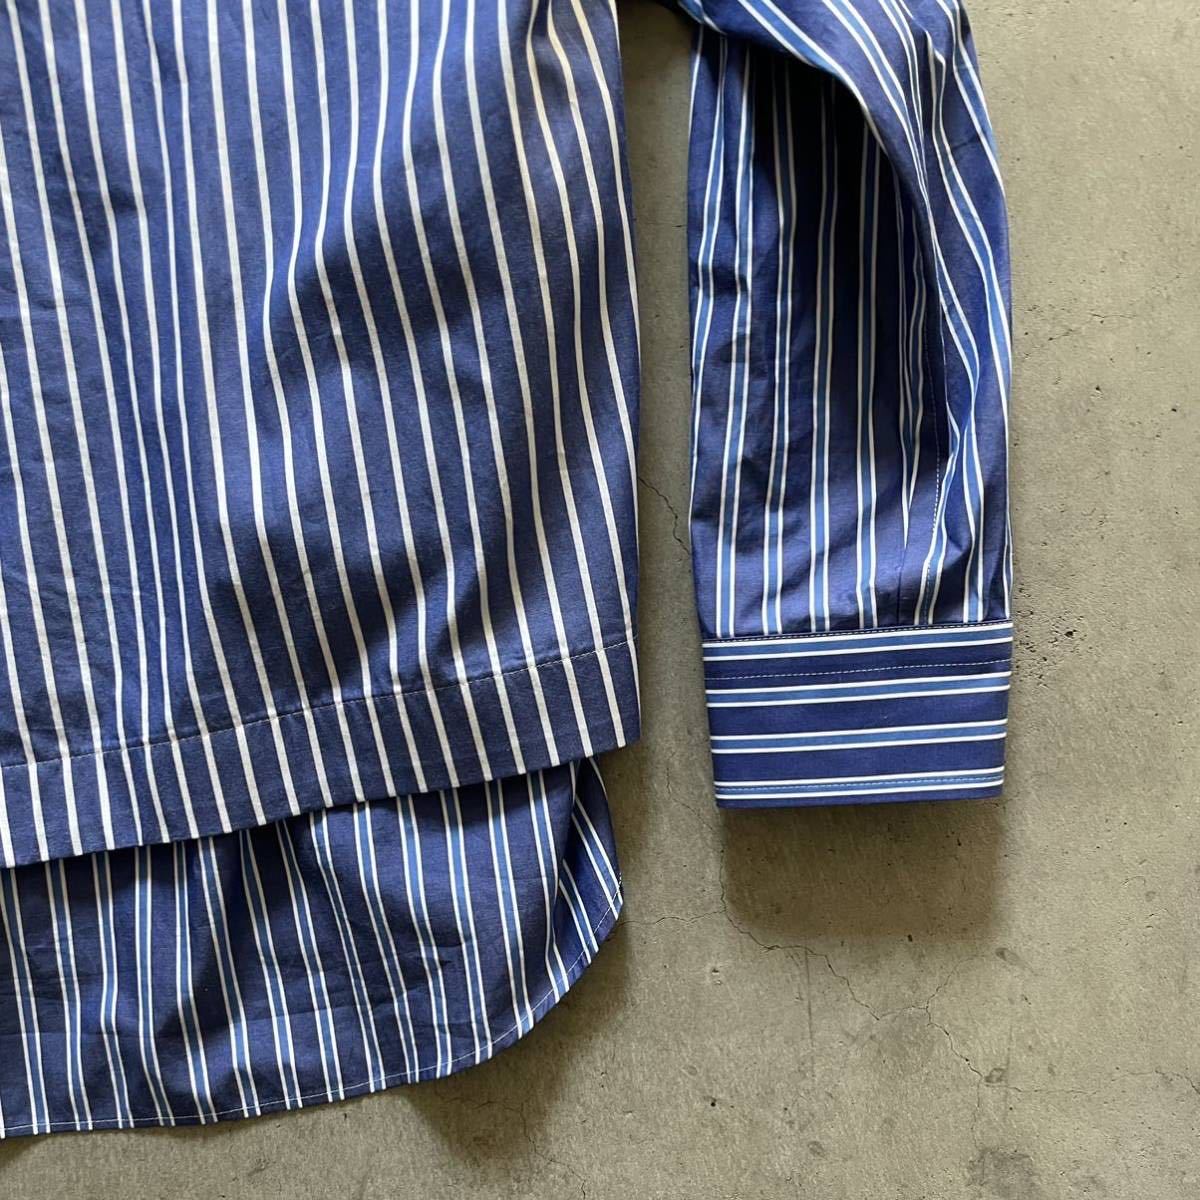 22aw sacai サカイ / Stripe Layered Shirt ストライプレイヤードシャツ / size 3 / ストライプ 長袖シャツ